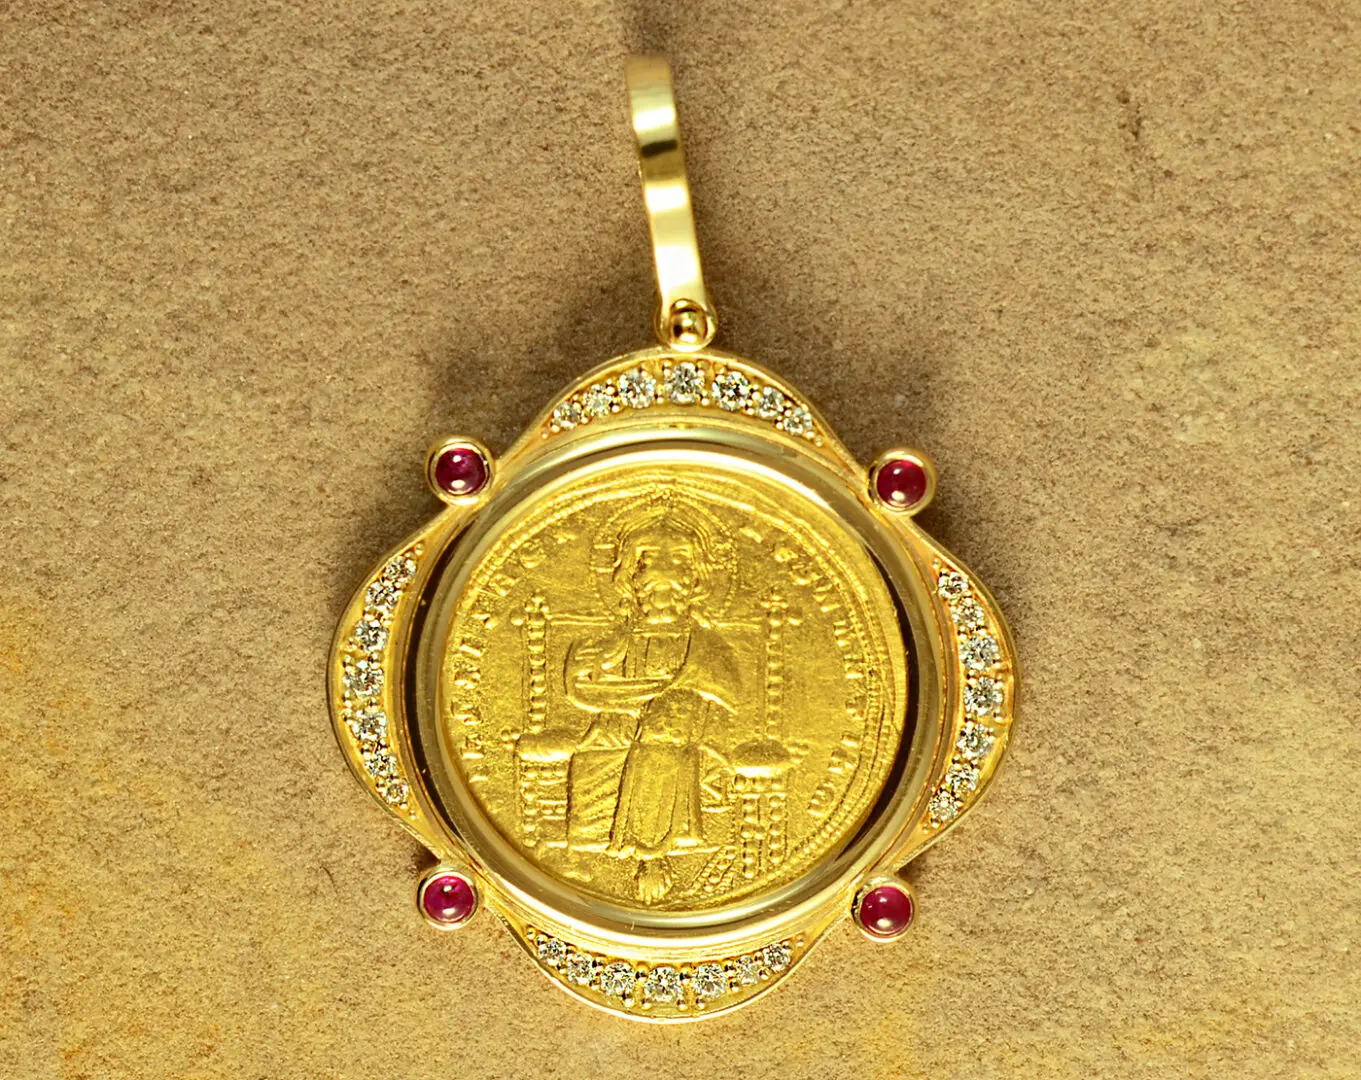 ANCIENT COINS CF191 050 DIA 036 RUBY ROMANUS III